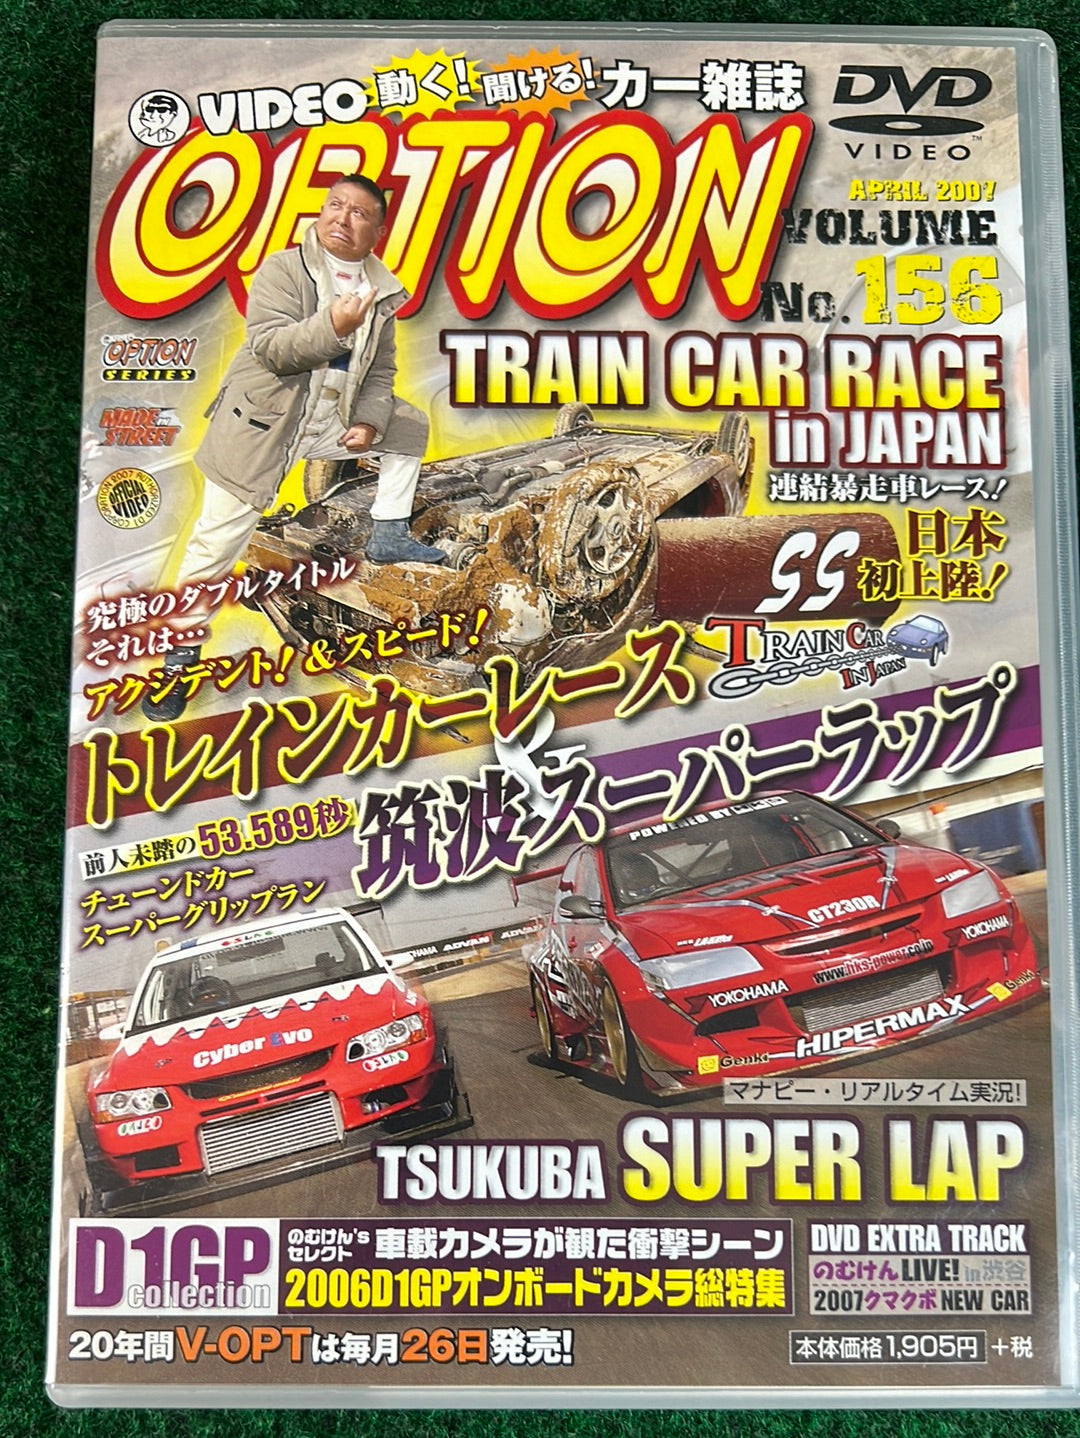 Option Video DVD -  April 2007 Vol. 156